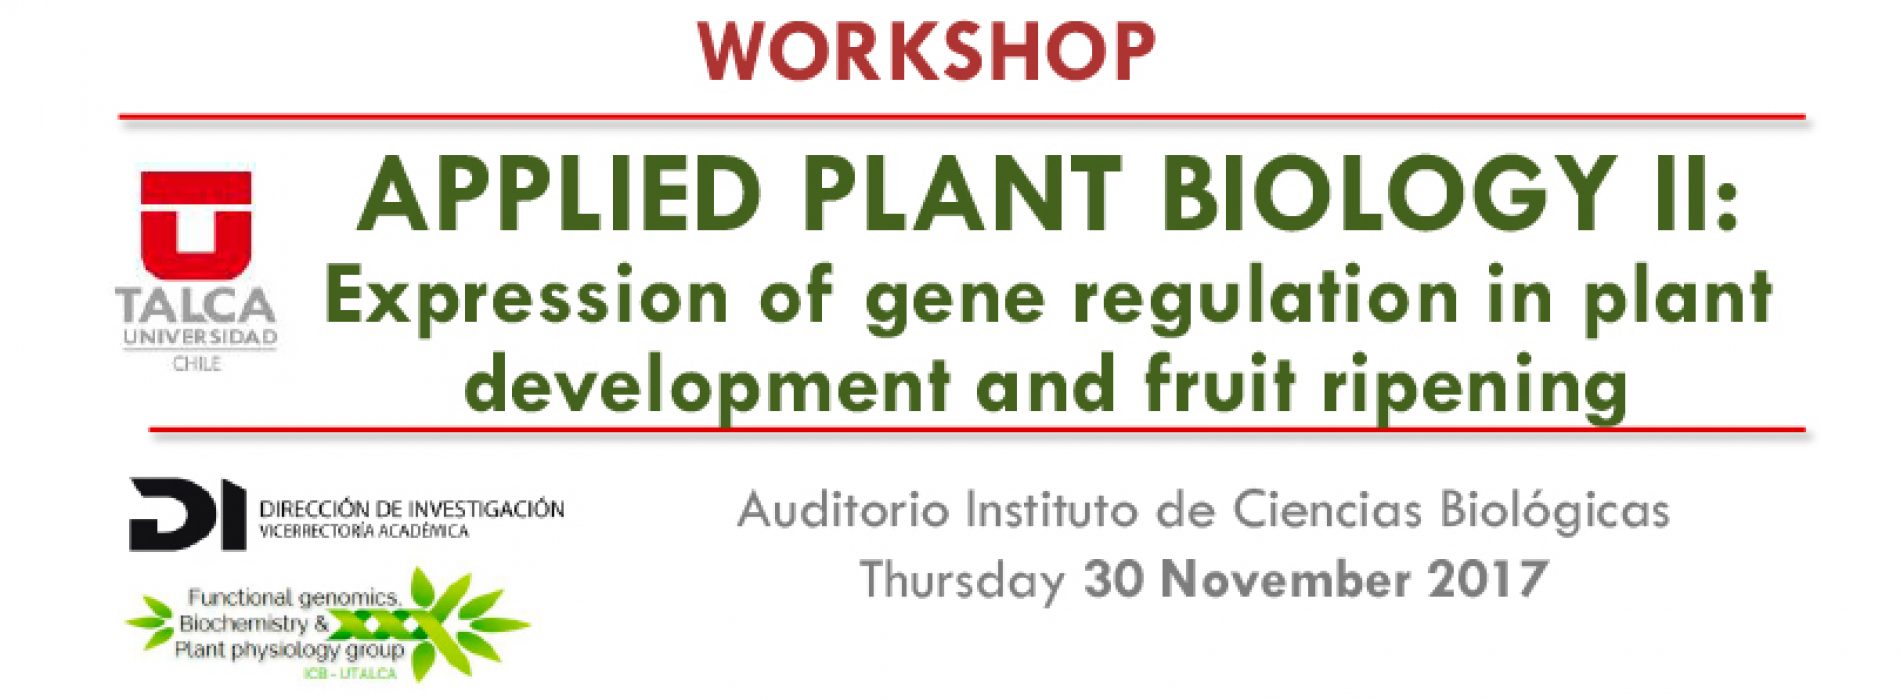 Workshop: “Applied Plant Biology II: Expression of gene regulation in plant development and fruit ripening”